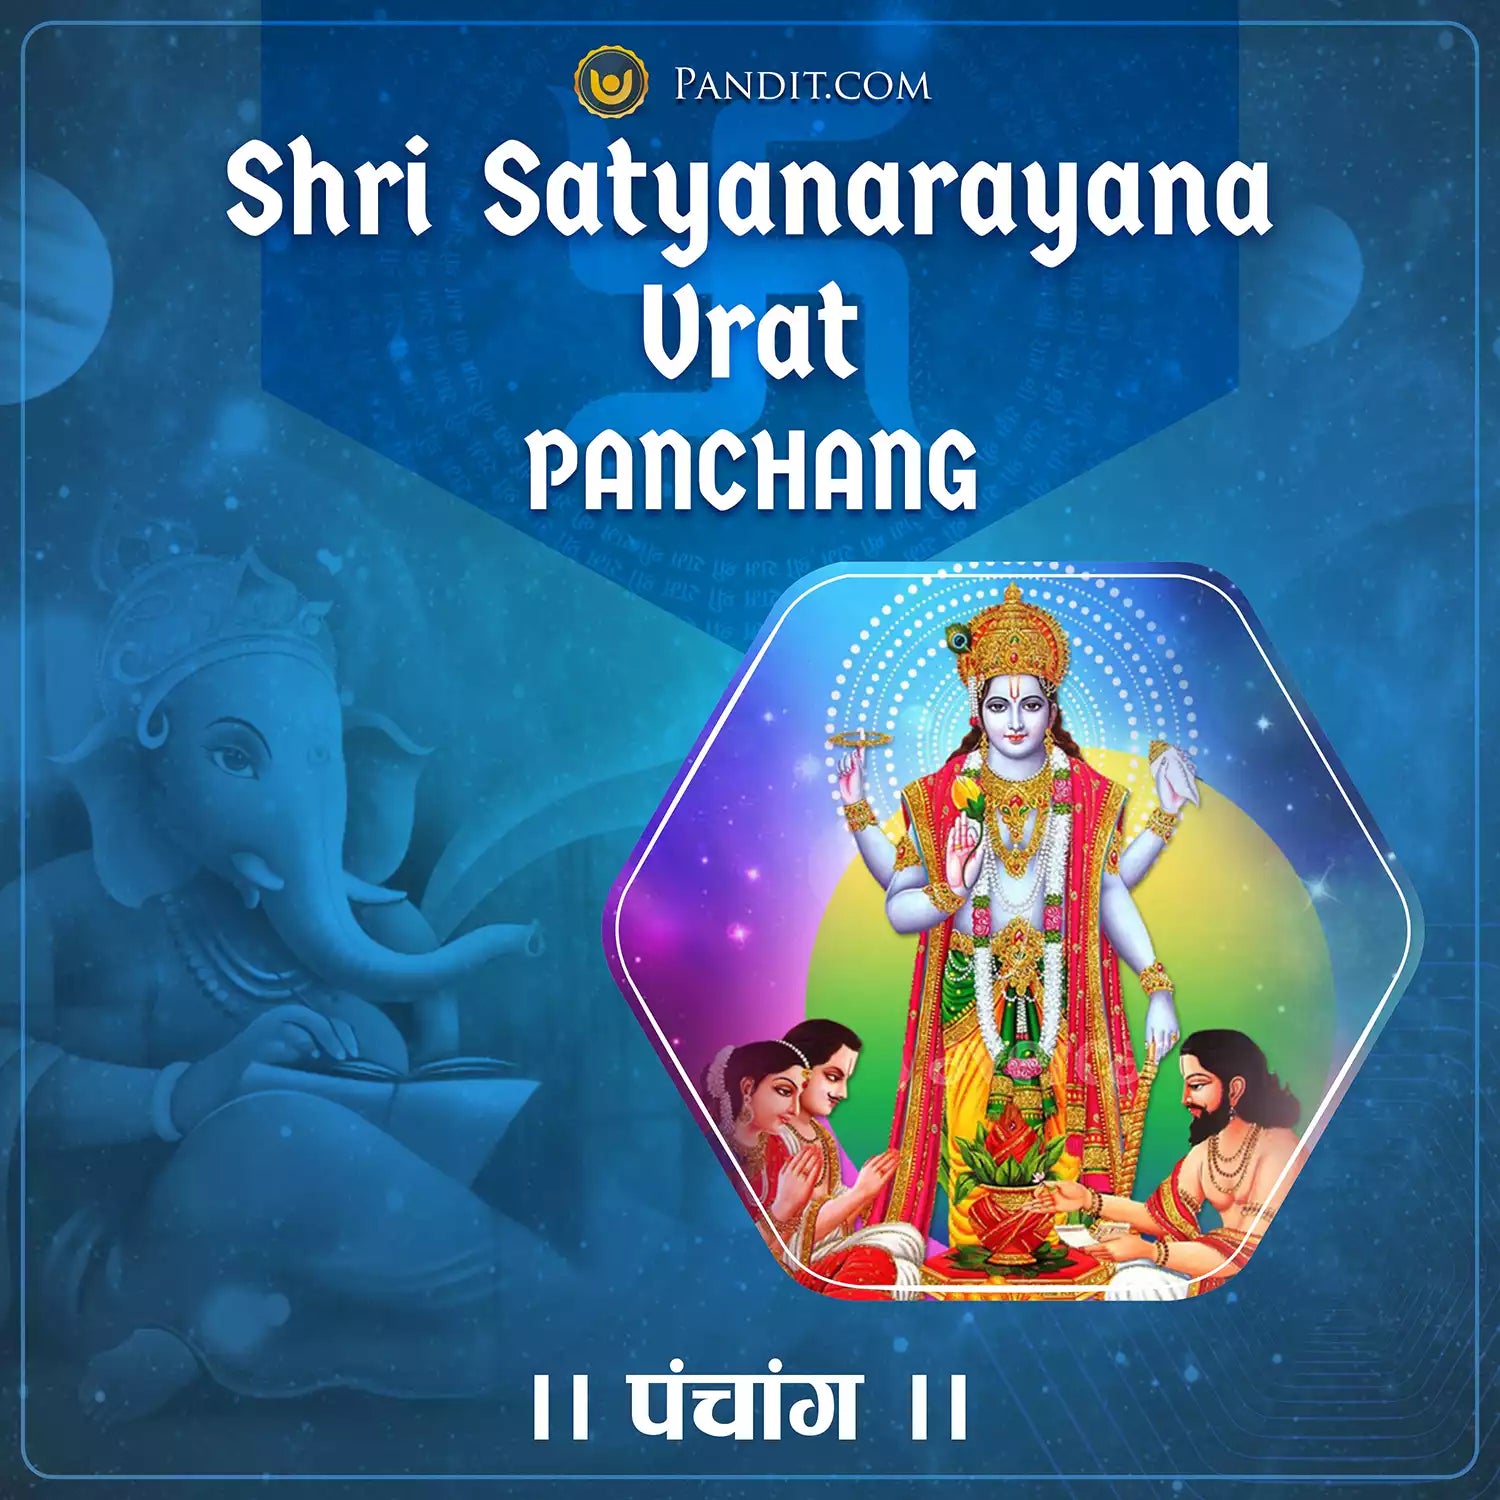 Shri Satyanarayana Vrat